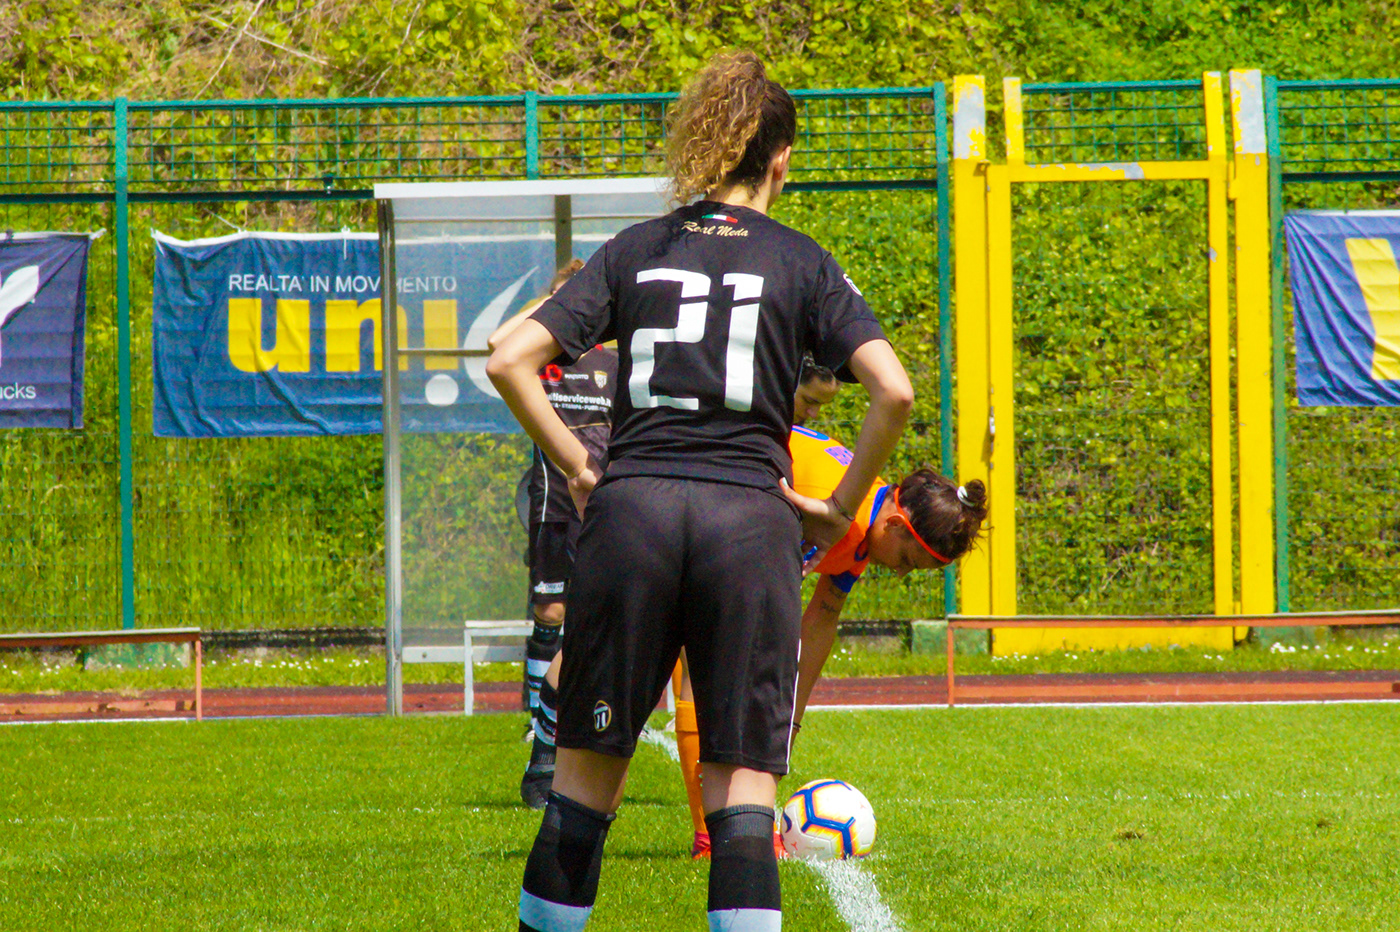 Real Meda Fotografia Photography  photoshoot calcio calcio femminile Women's Football lightroom photographer sports